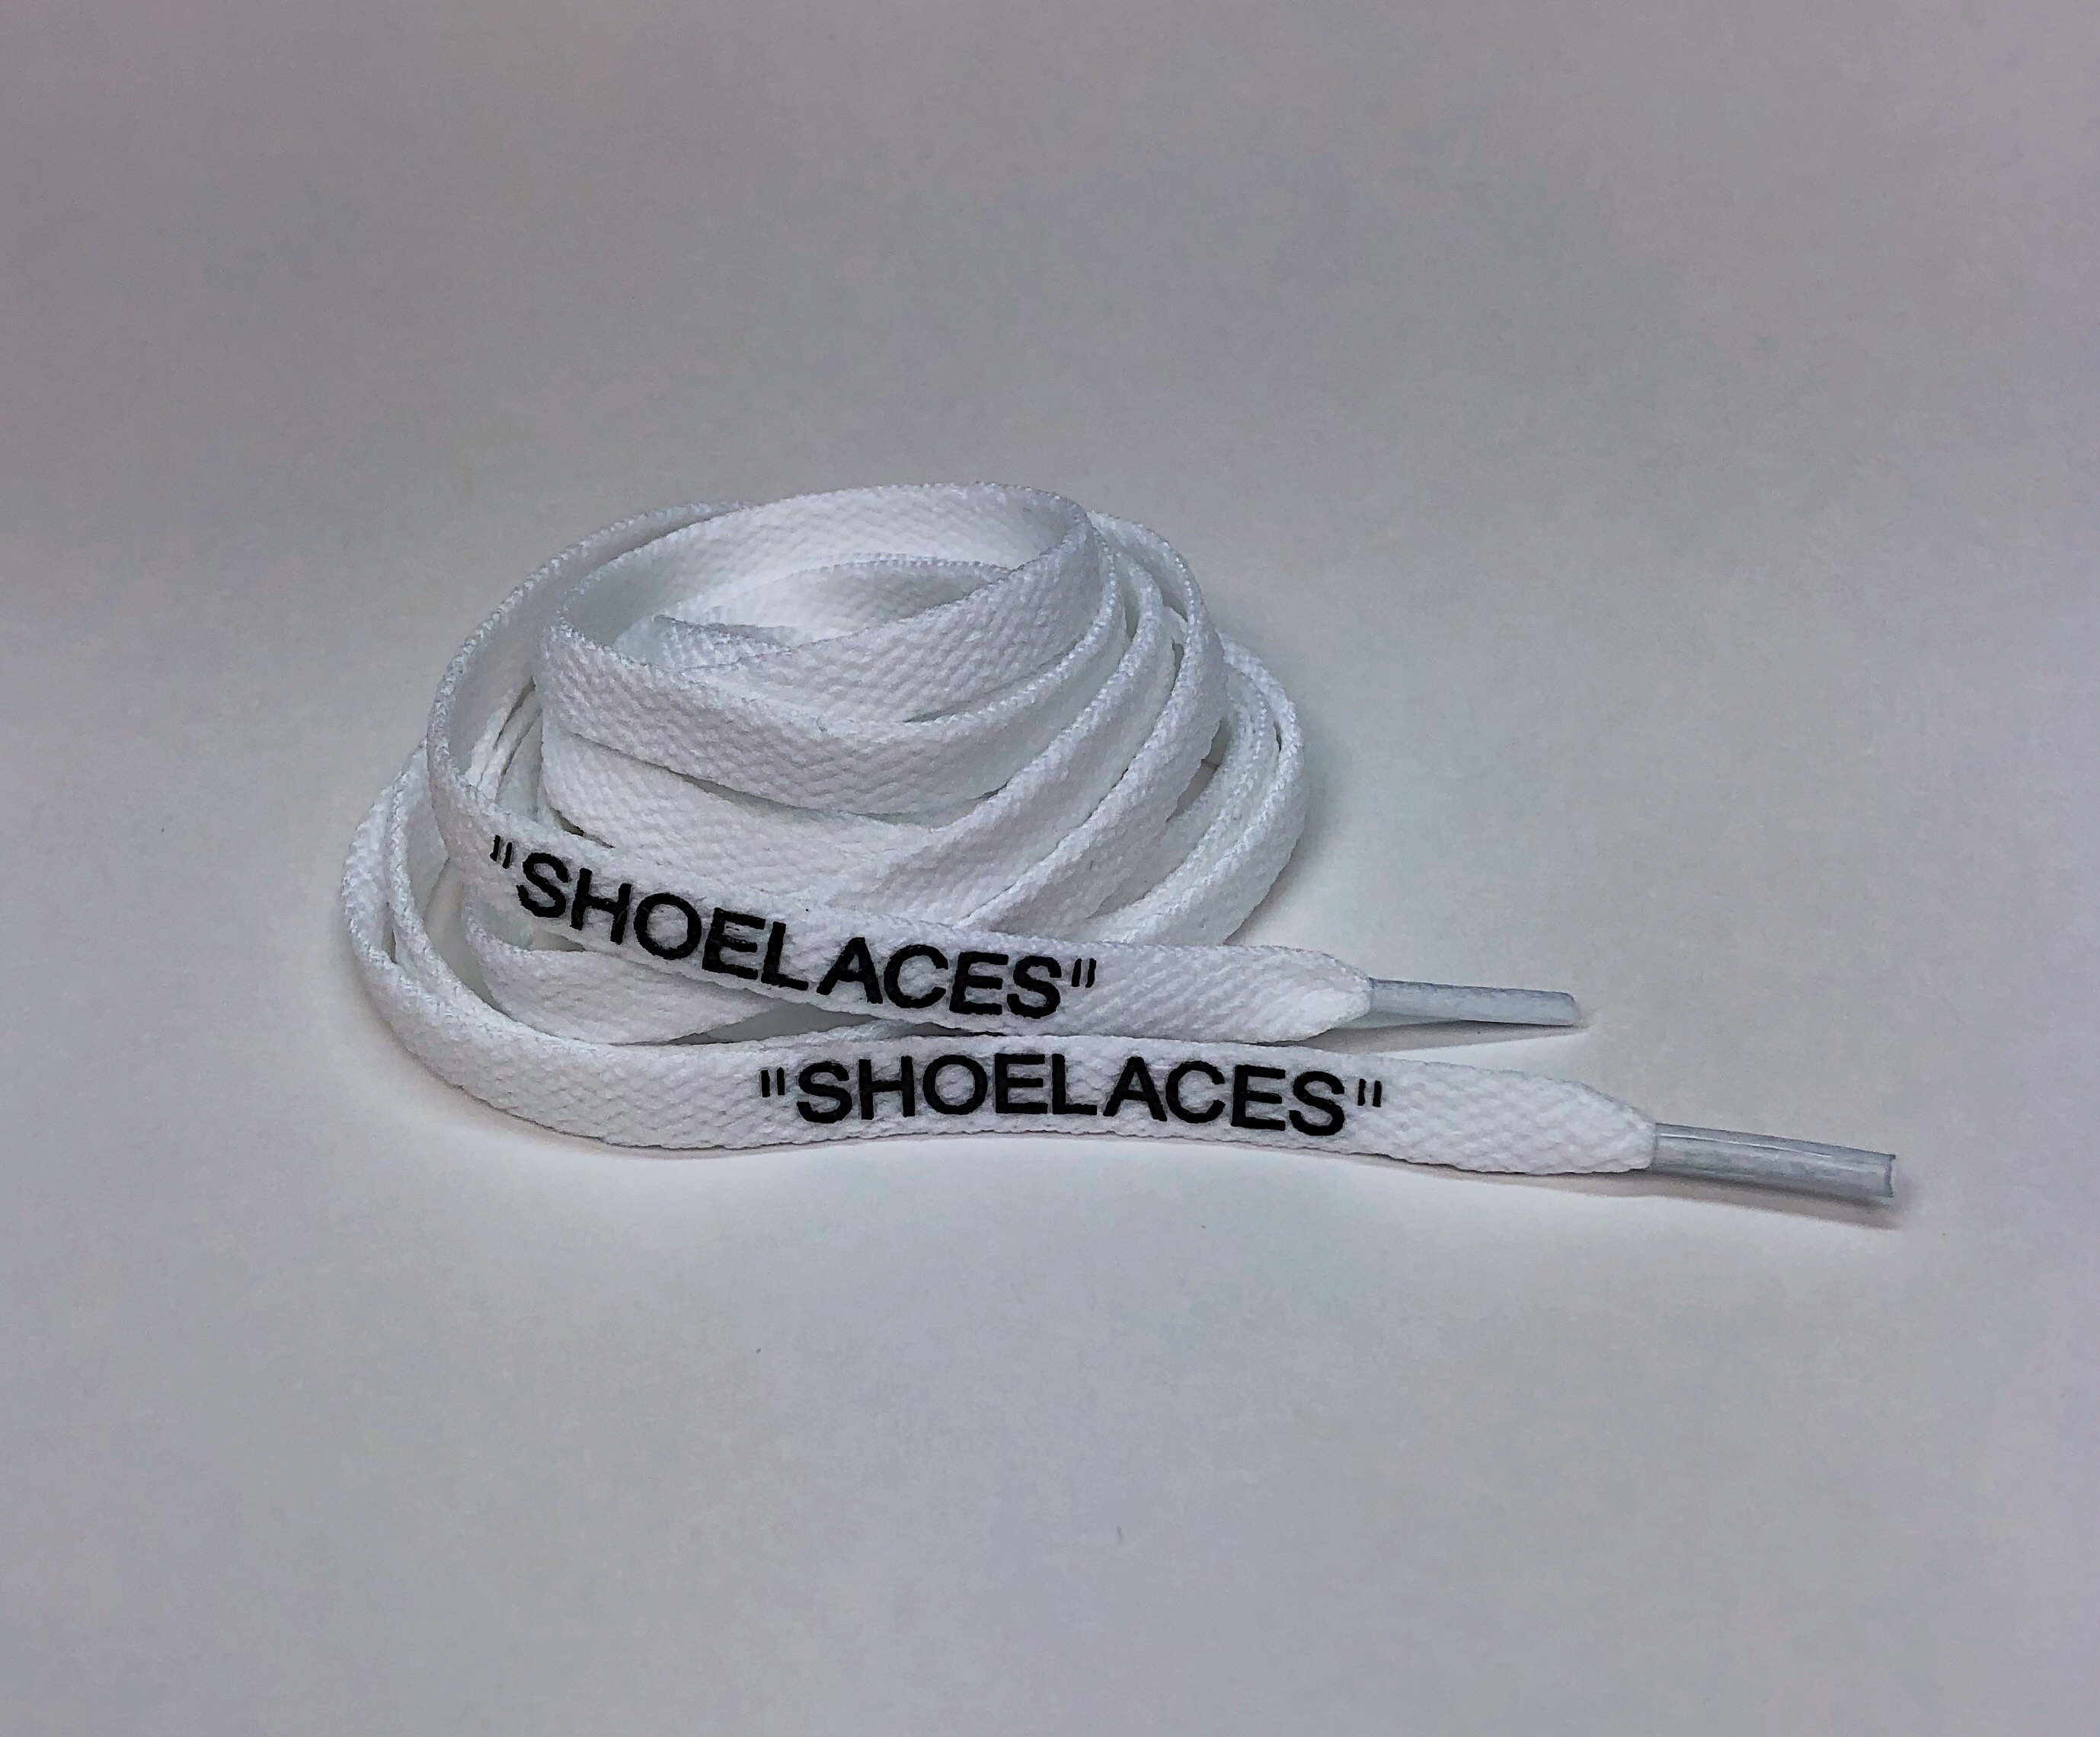 Off White Replacement shoelaces Shoe Laces | Etsy